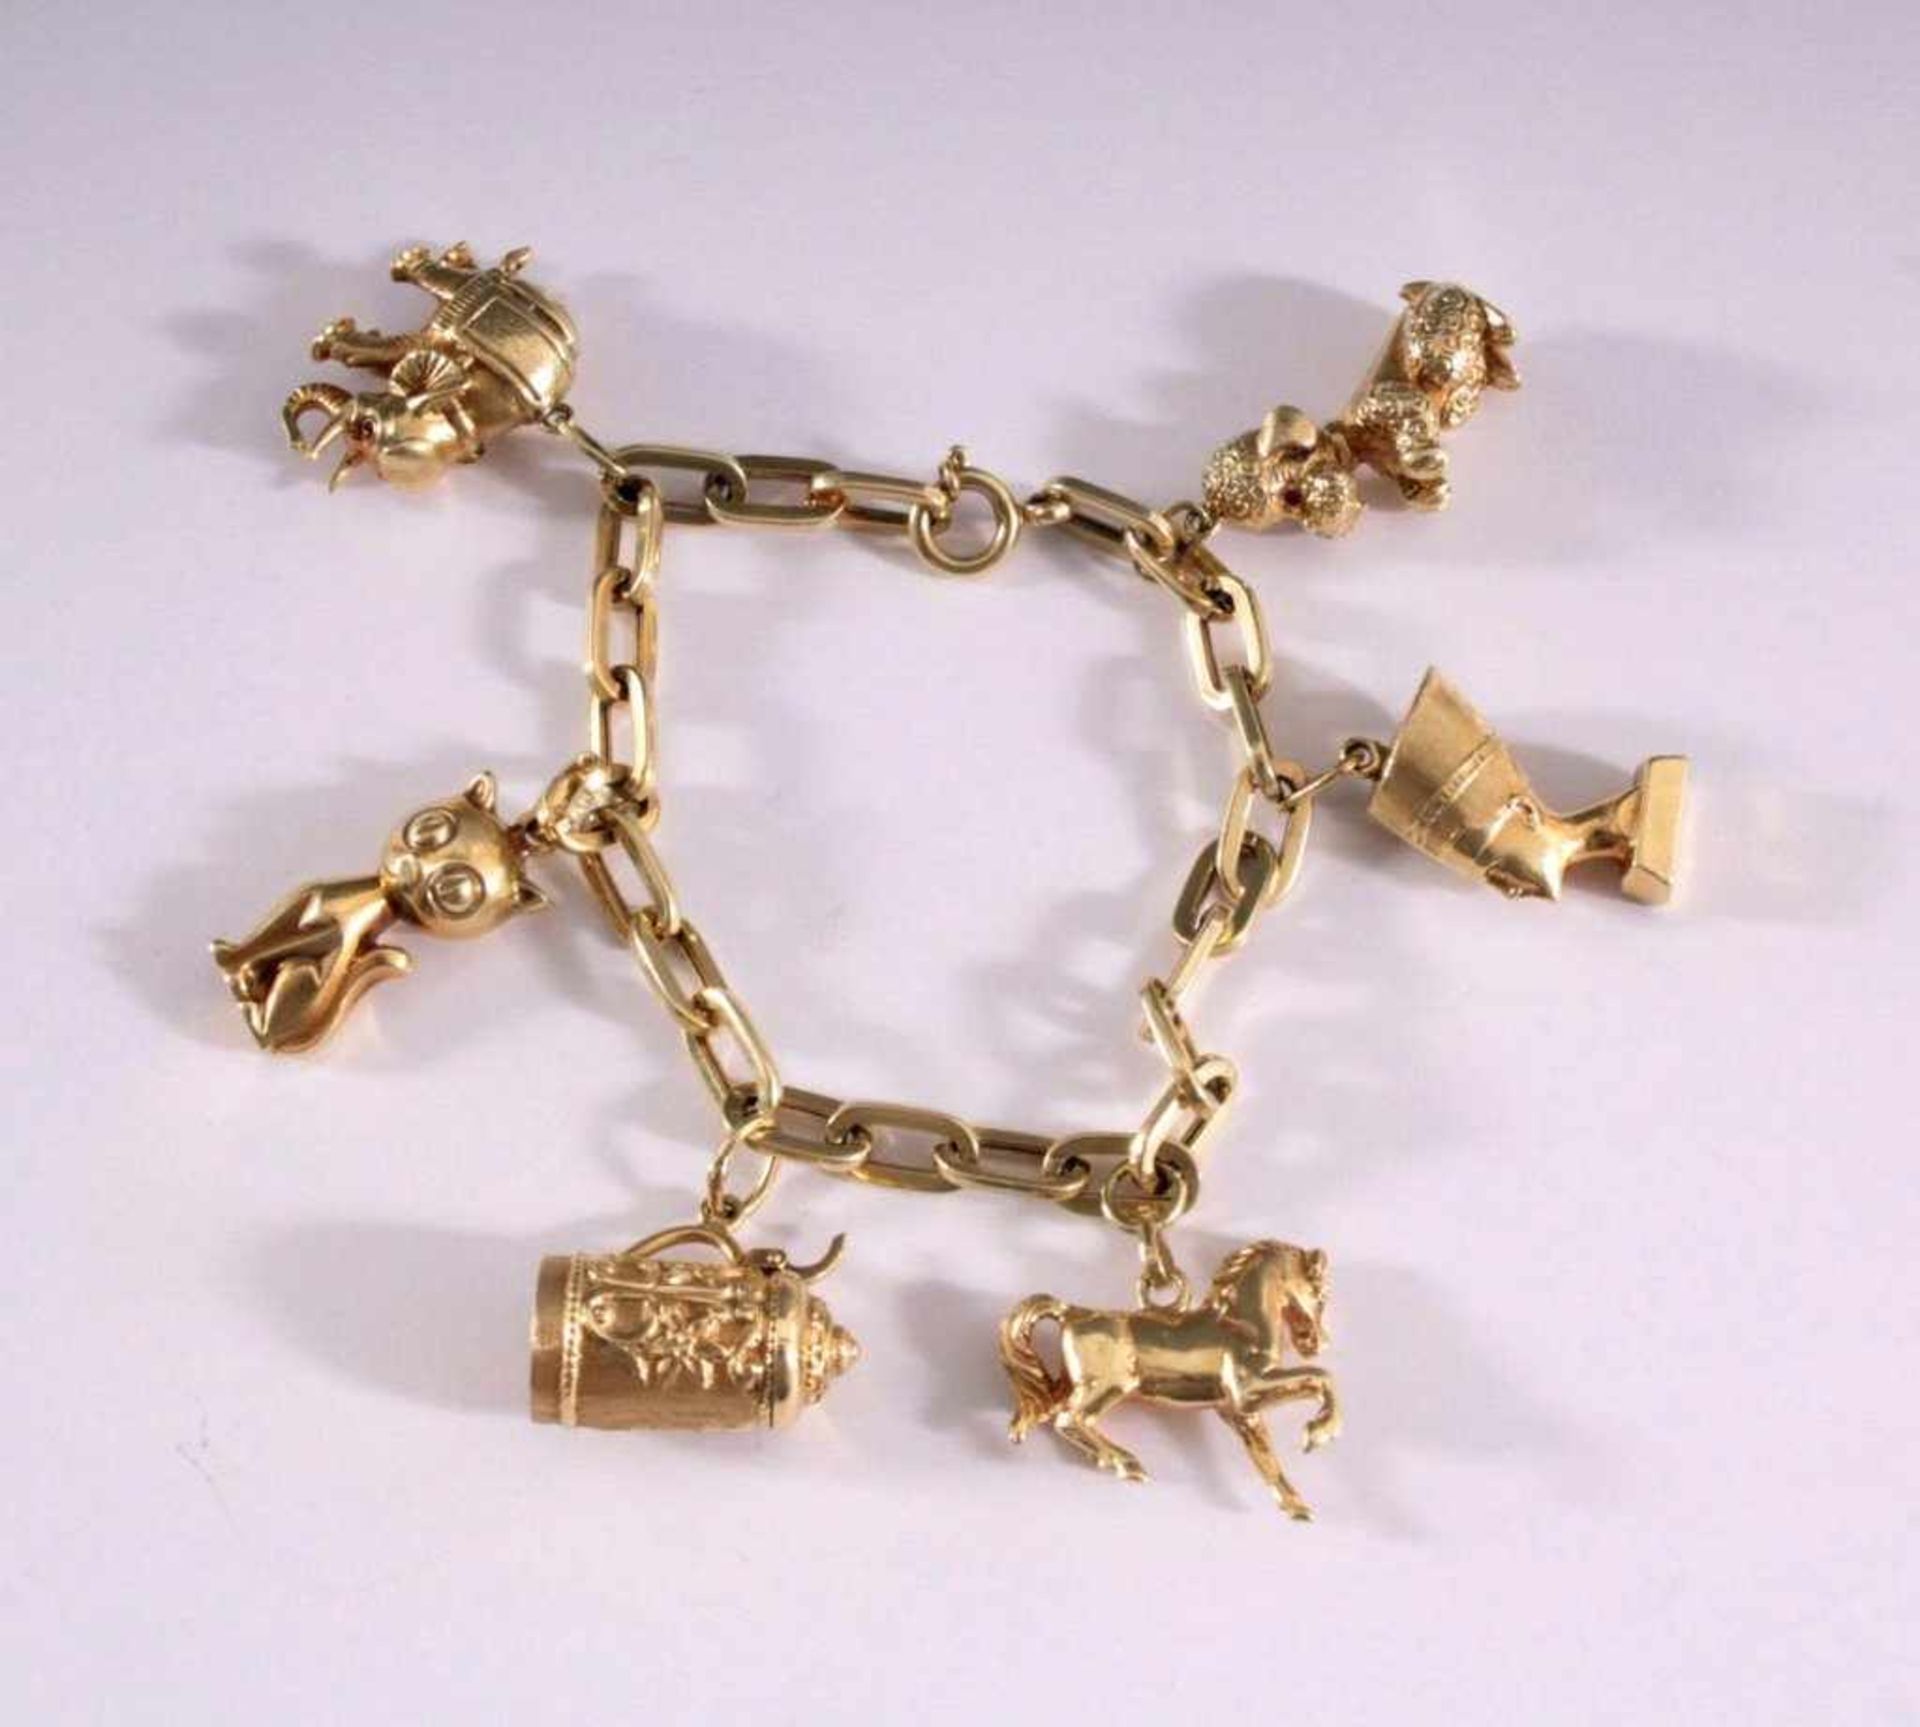 Bettelarmband aus 14 Karat GelbgoldKettengliederarmband mit 6 Anhänger u.a. Pudel, Elefant,Pferd,